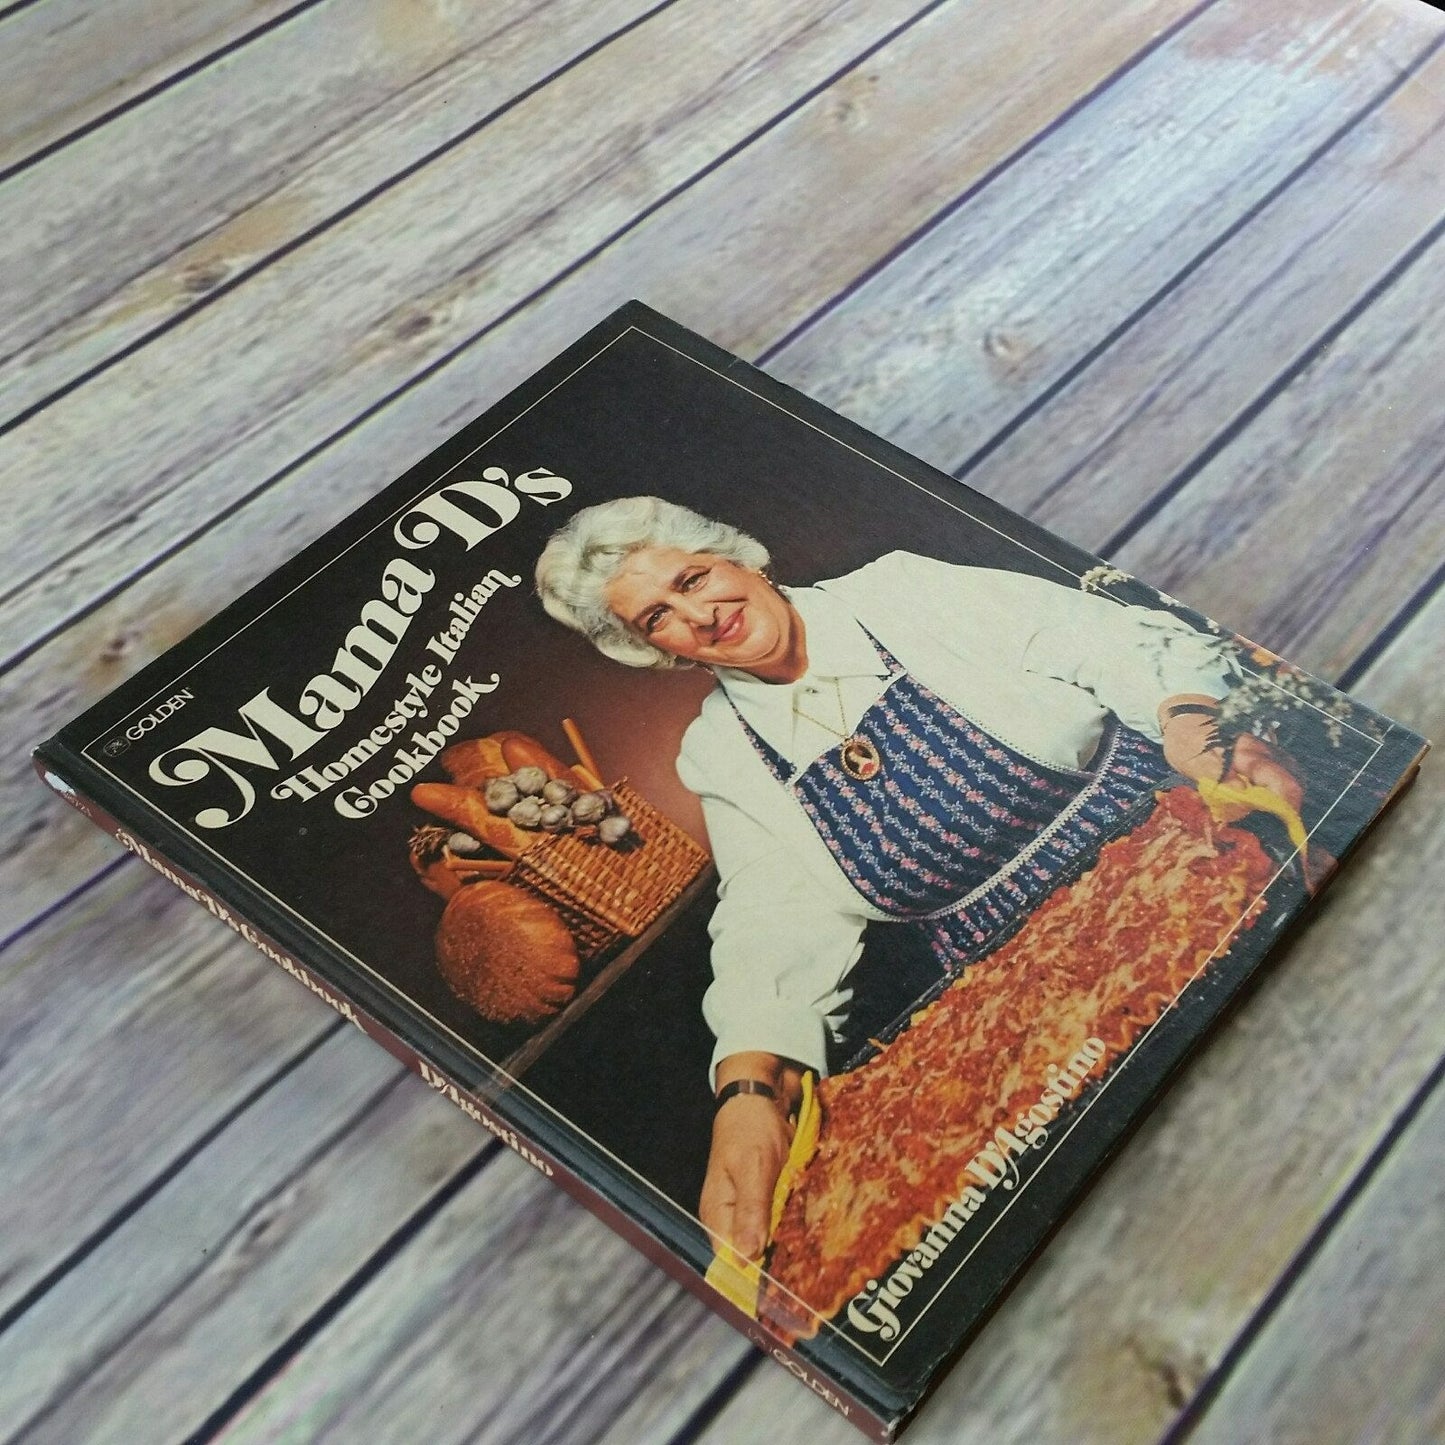 Vintage Italian Cookbook Mama Ds Homestyle Italian Recipes 1975 Hardcover No Dust Jacket Giovanna D'Agostino Golden Press